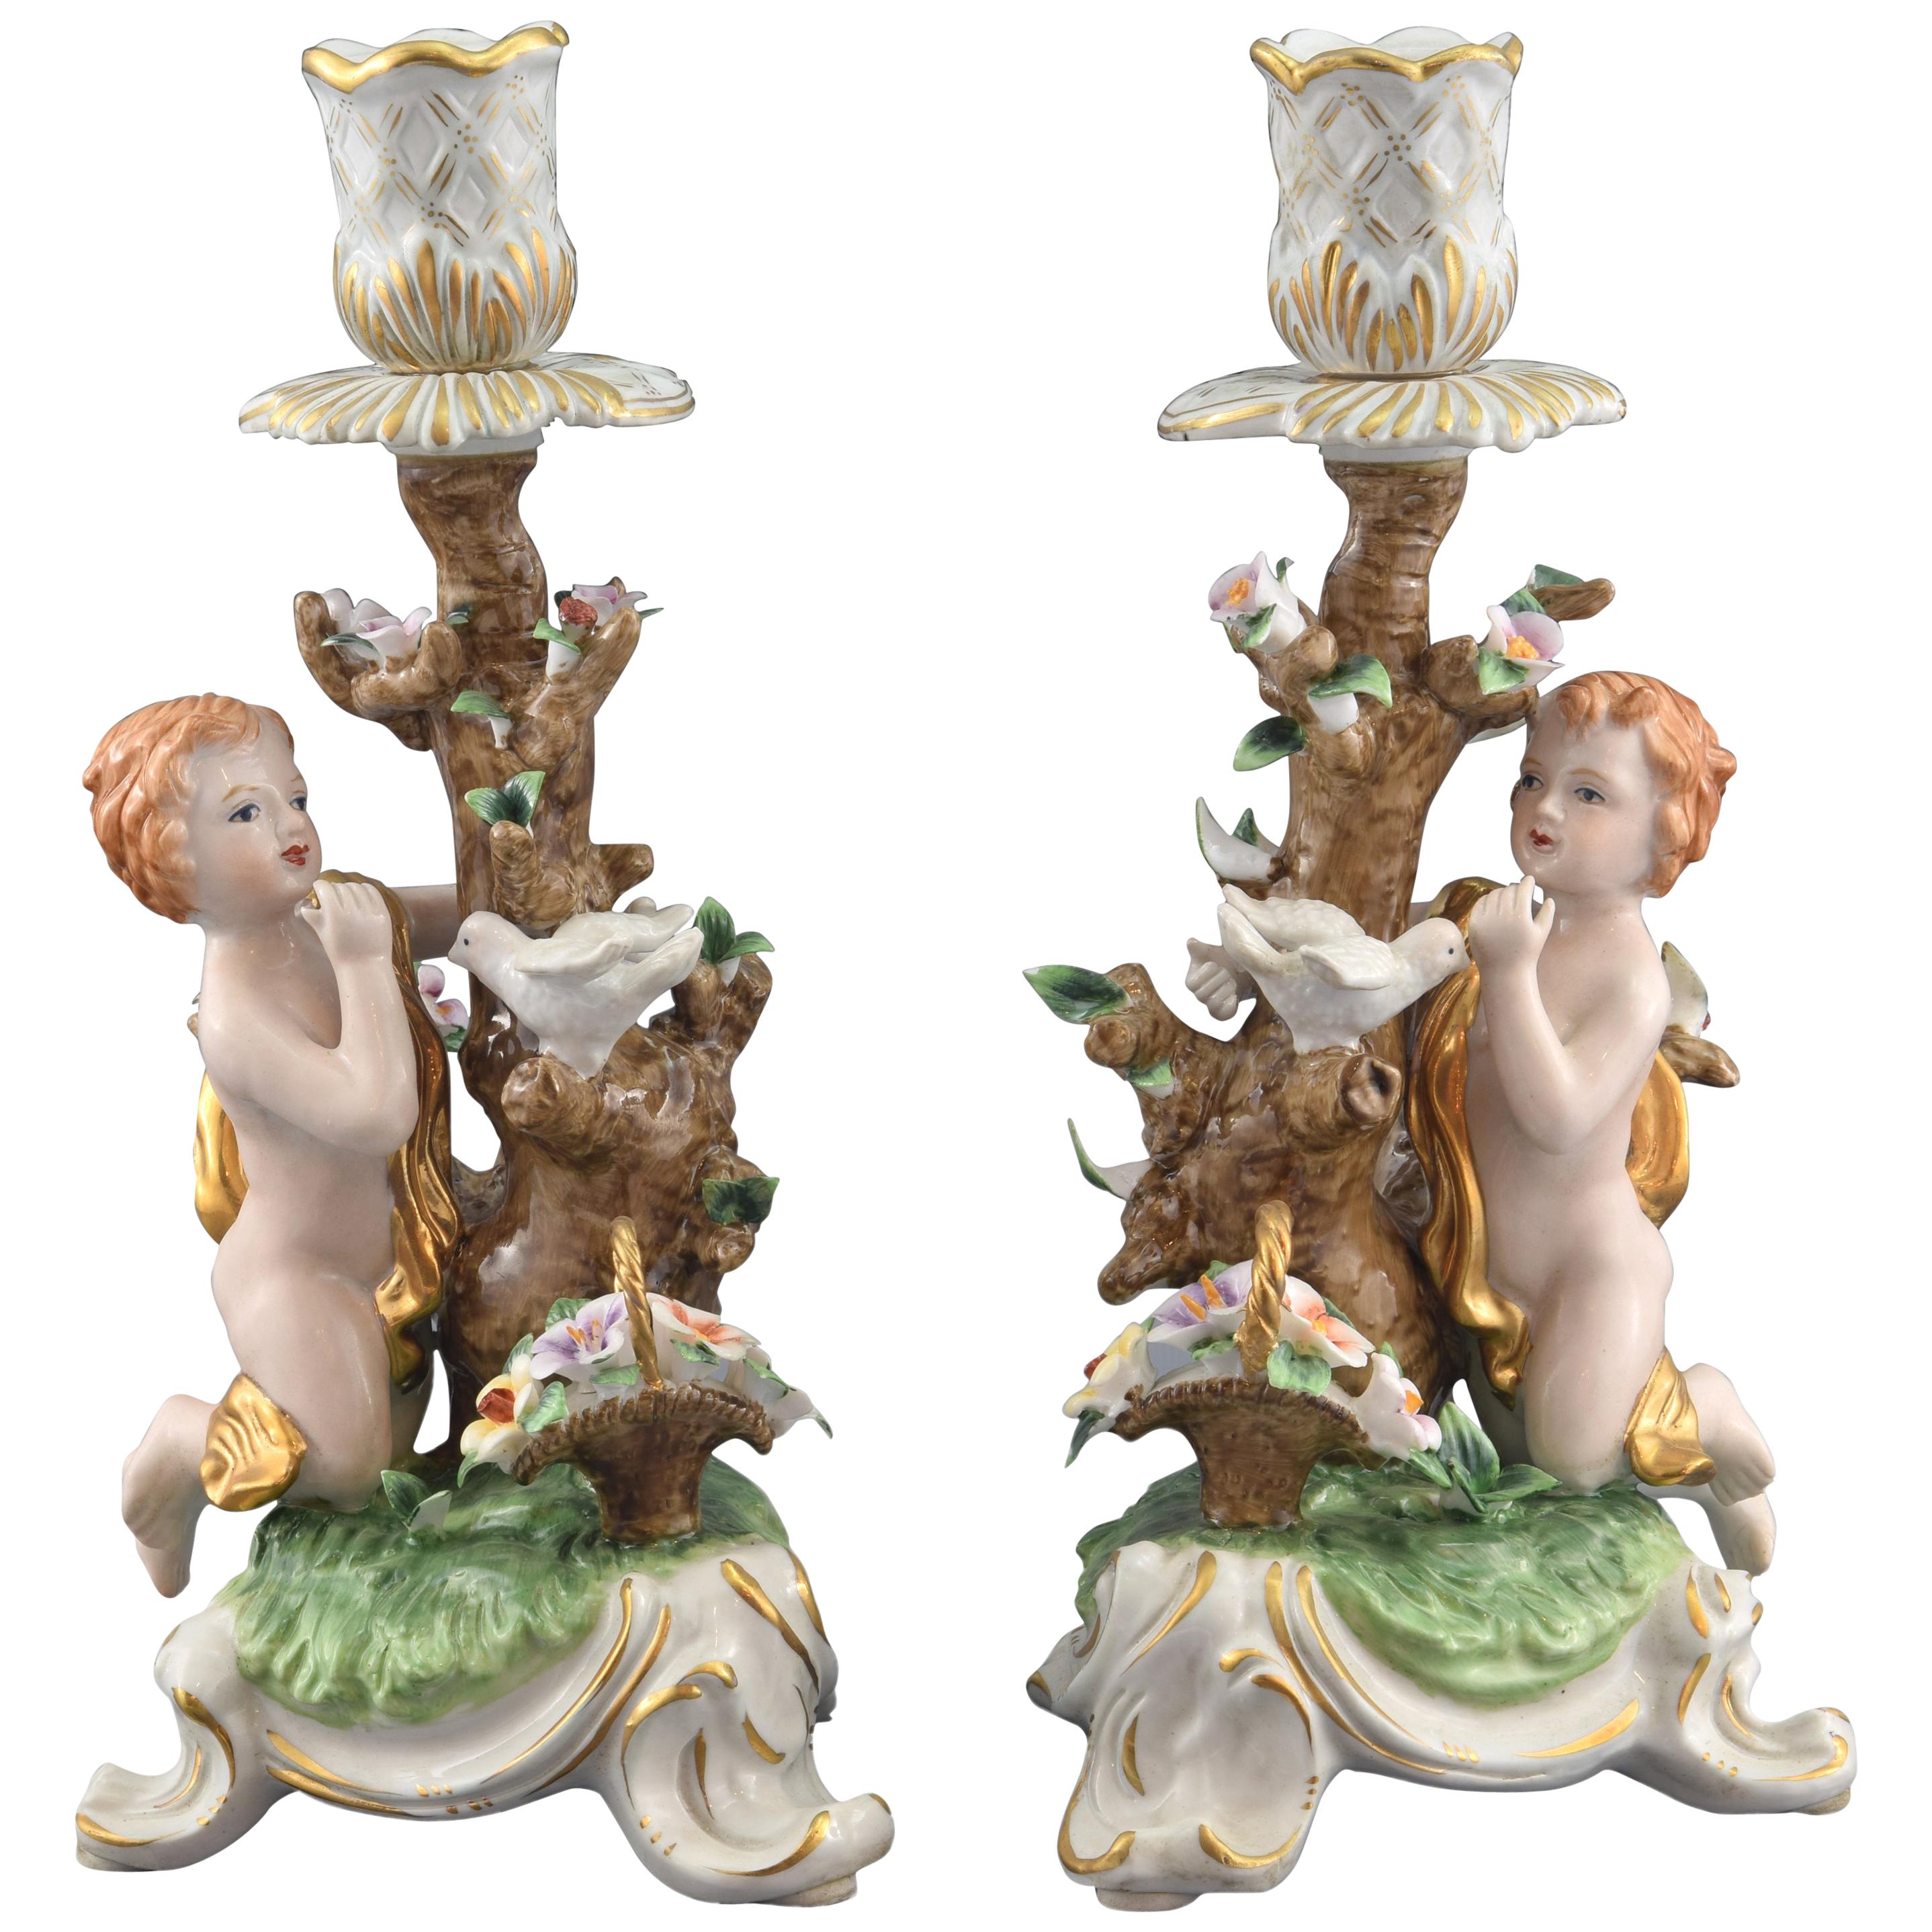 Pair of Porcelain Candleholders, after Models from Sèvres, France